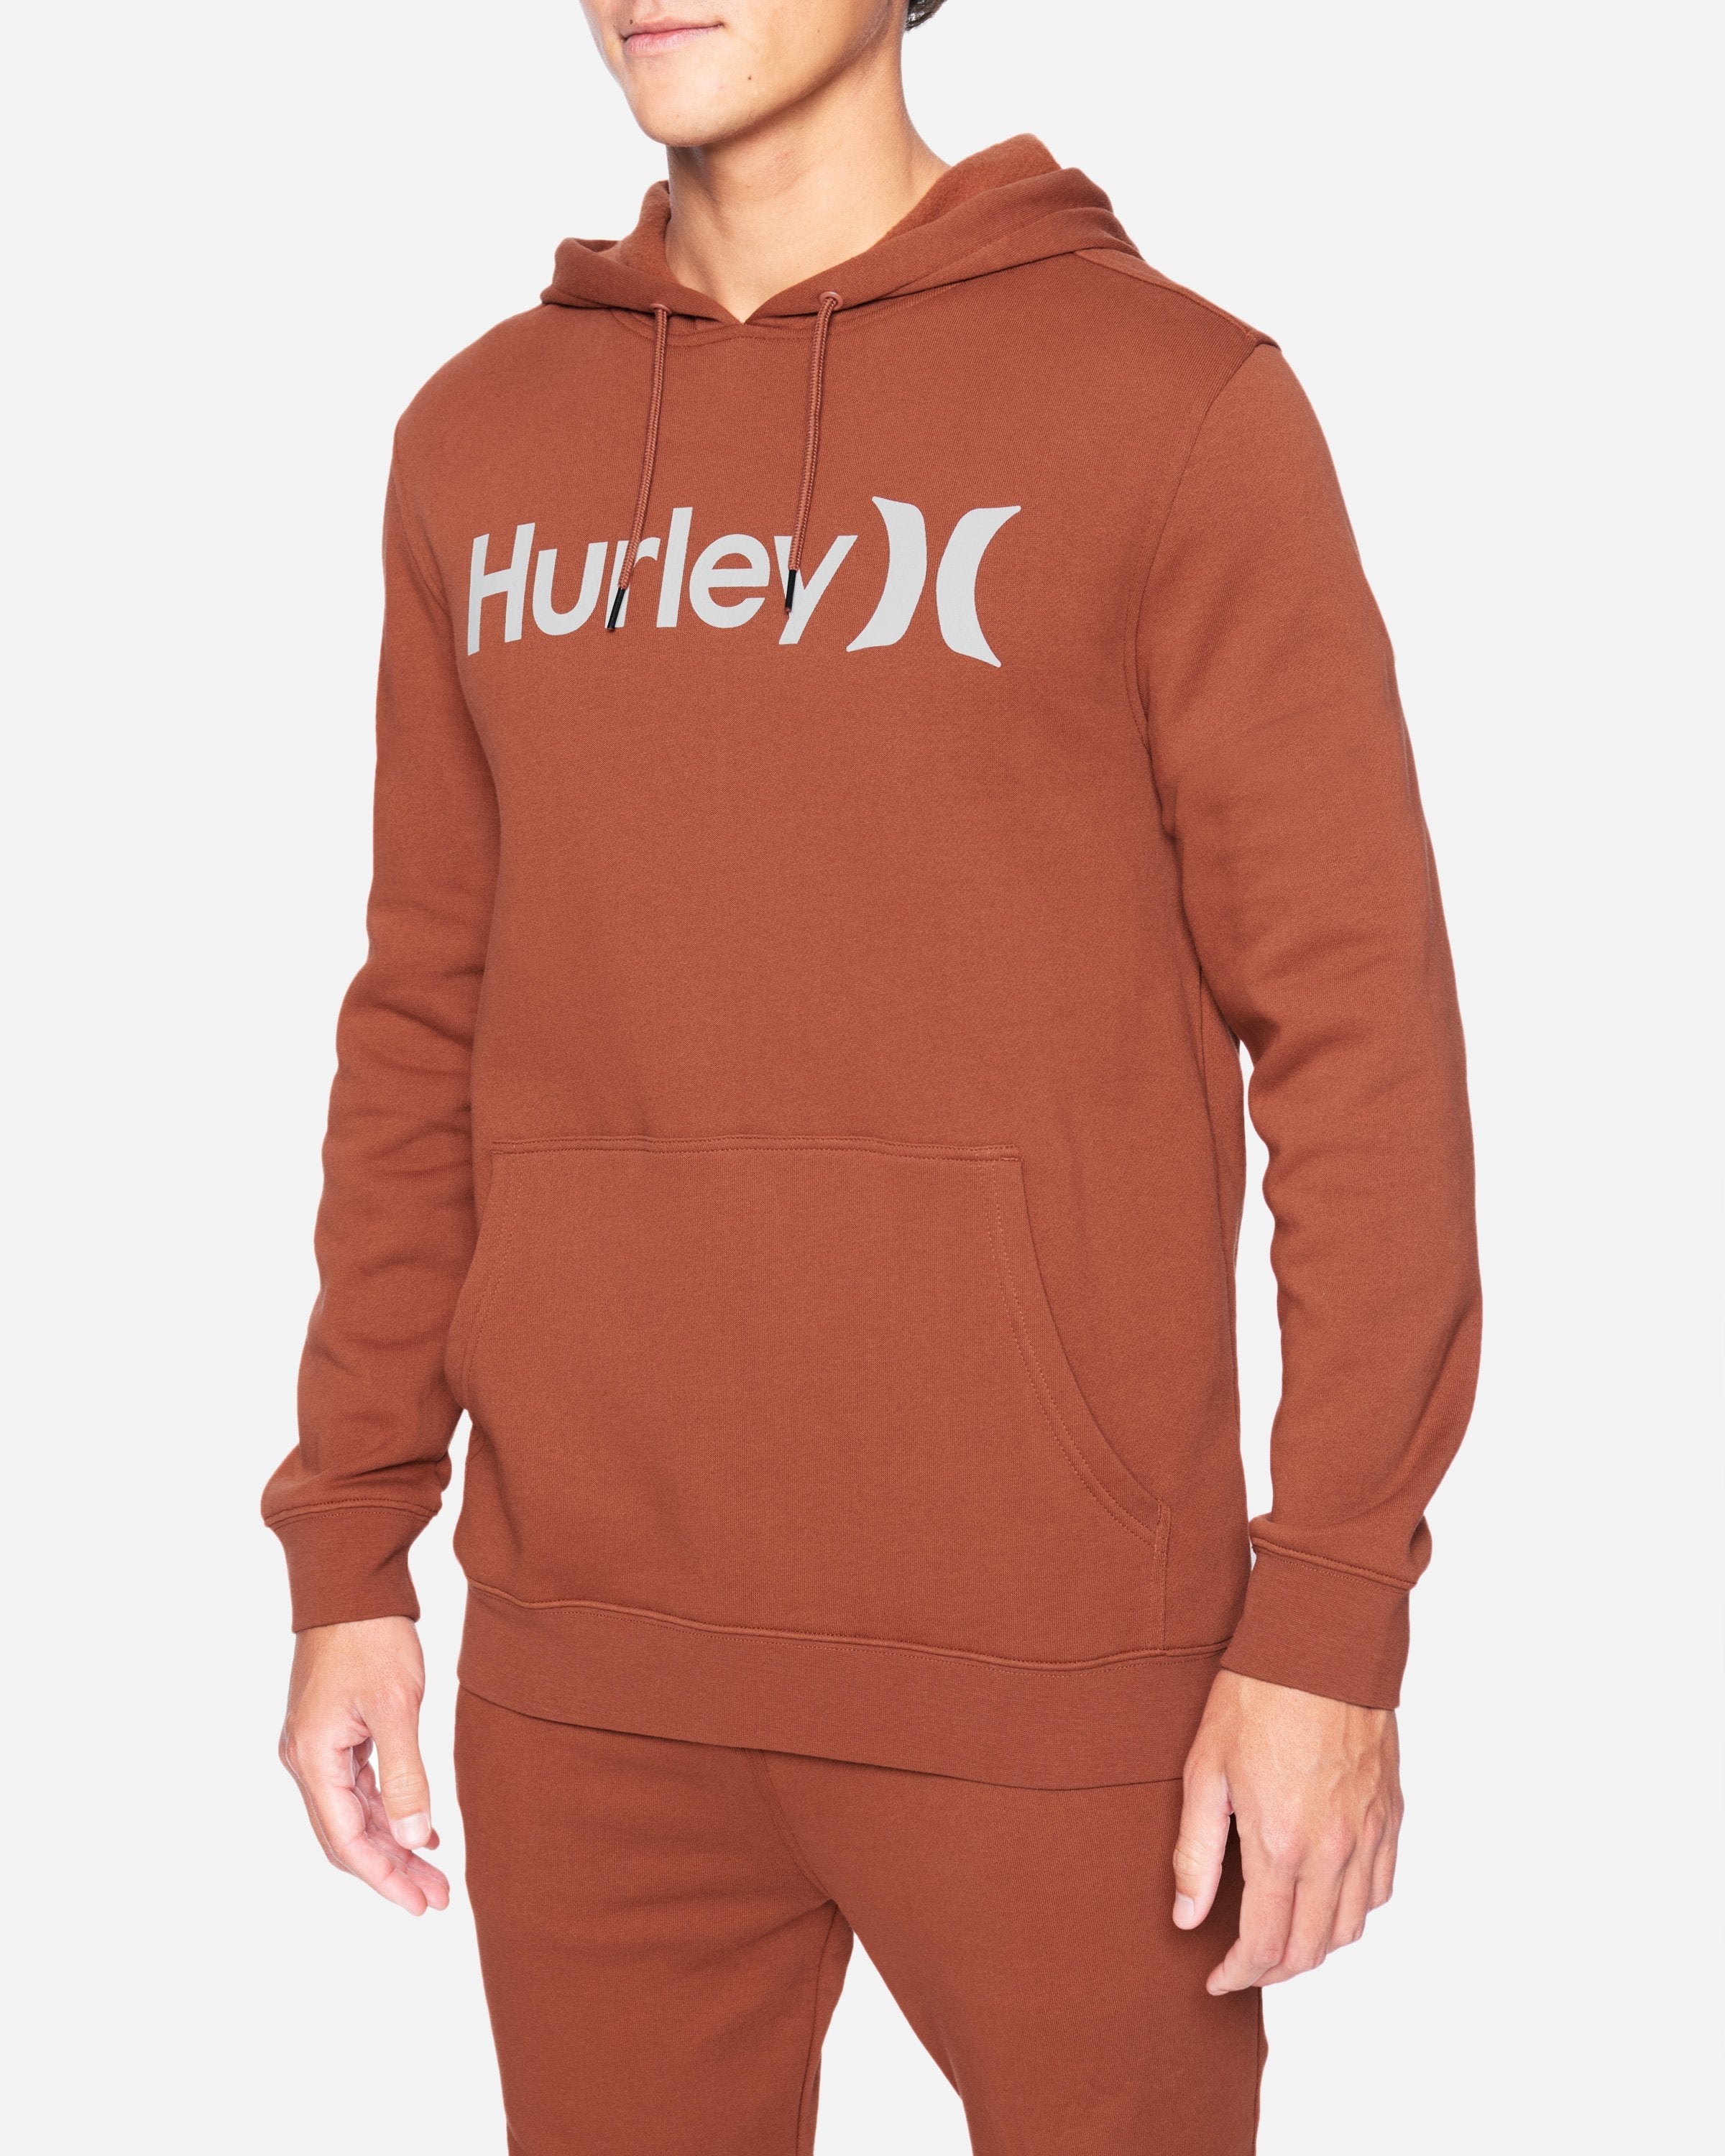 Hurley OAO Solid Summer Pullover Hoodie.